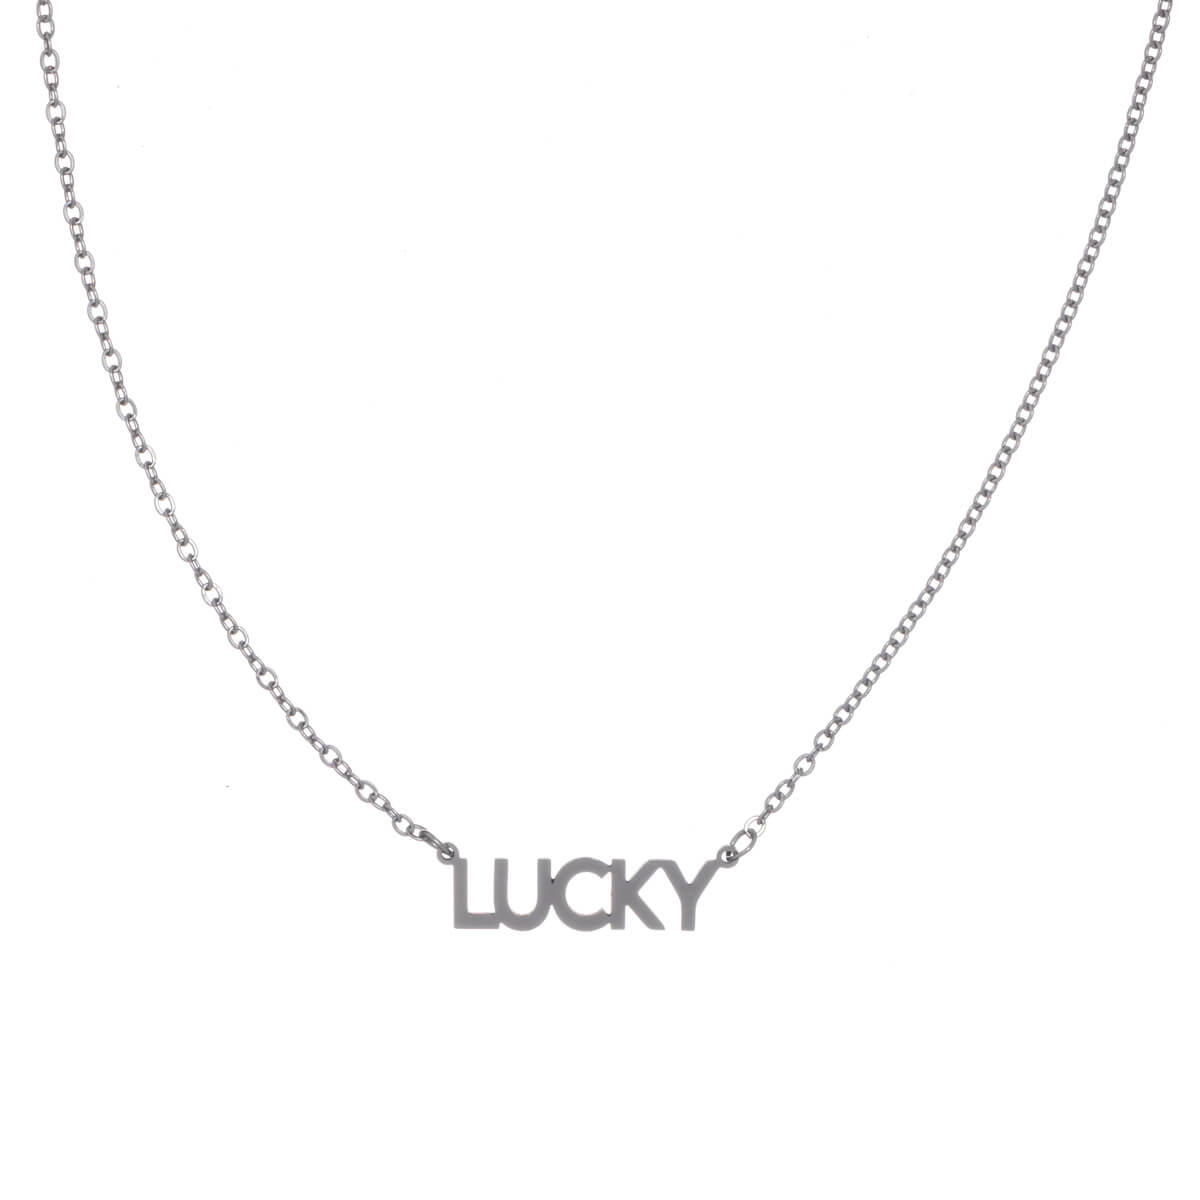 Lucky pendant necklace 45cm (steel 316L)